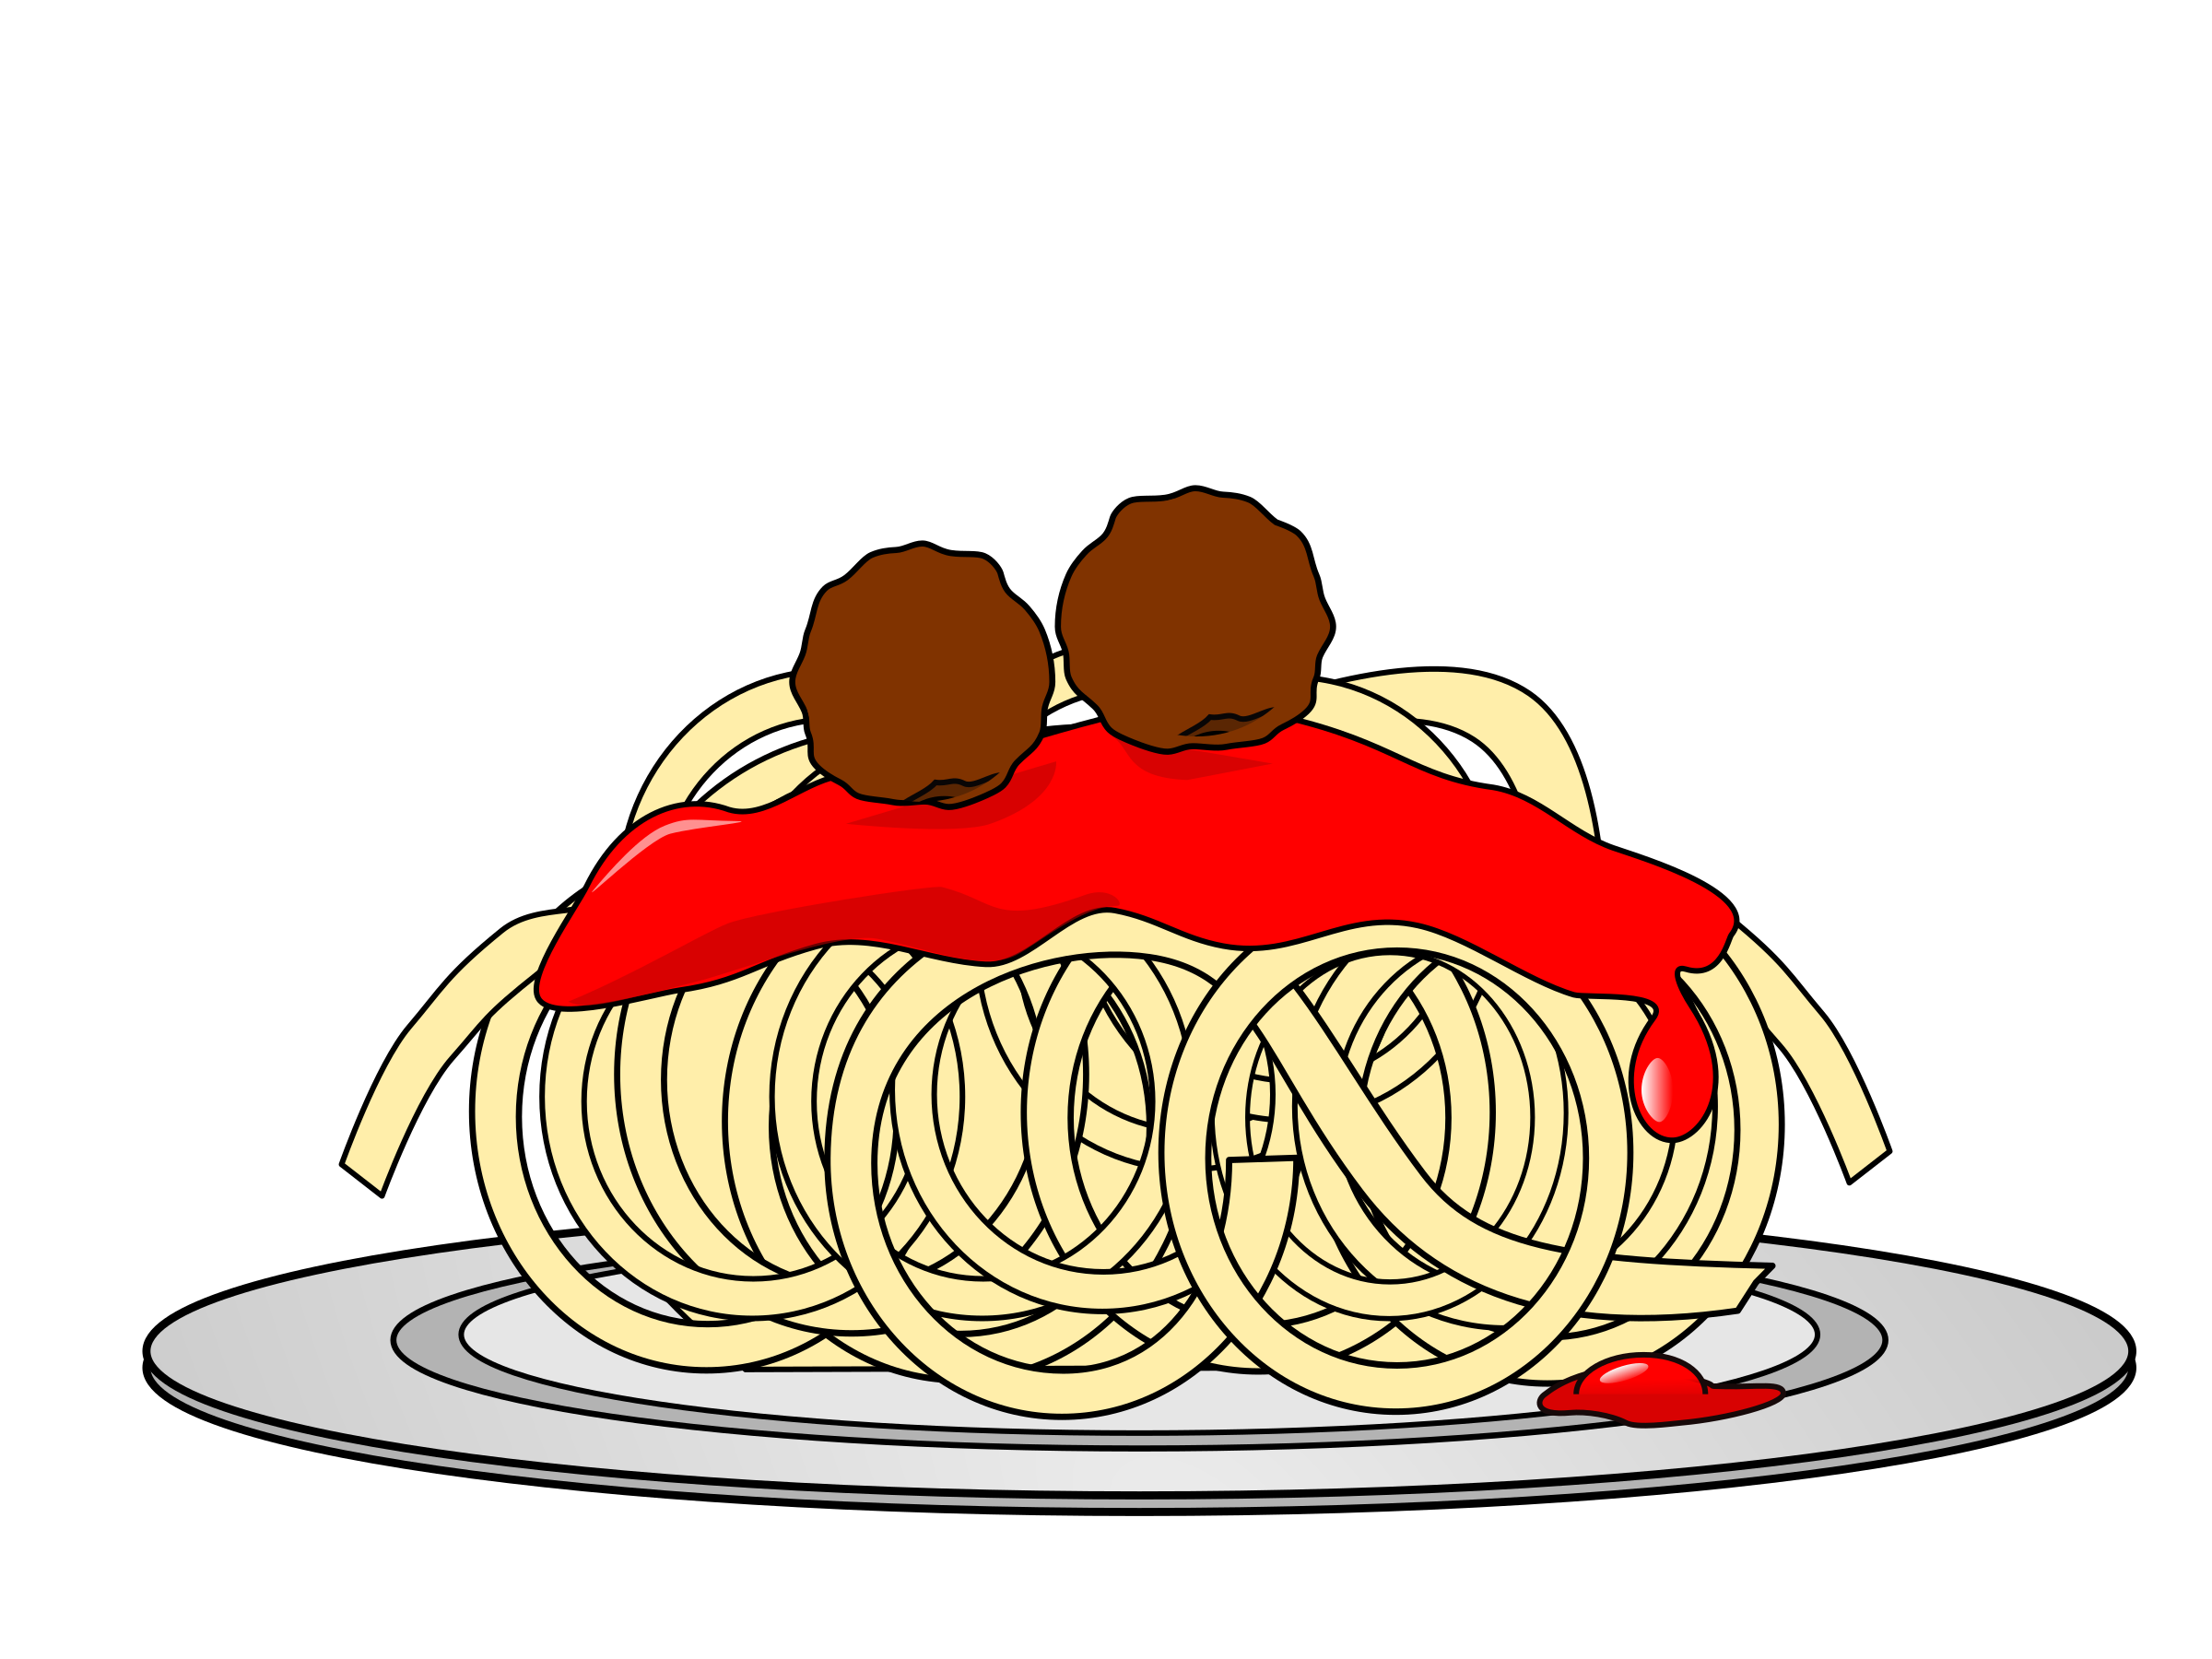 Best HD Pasta And Meatballs Cartoons Image